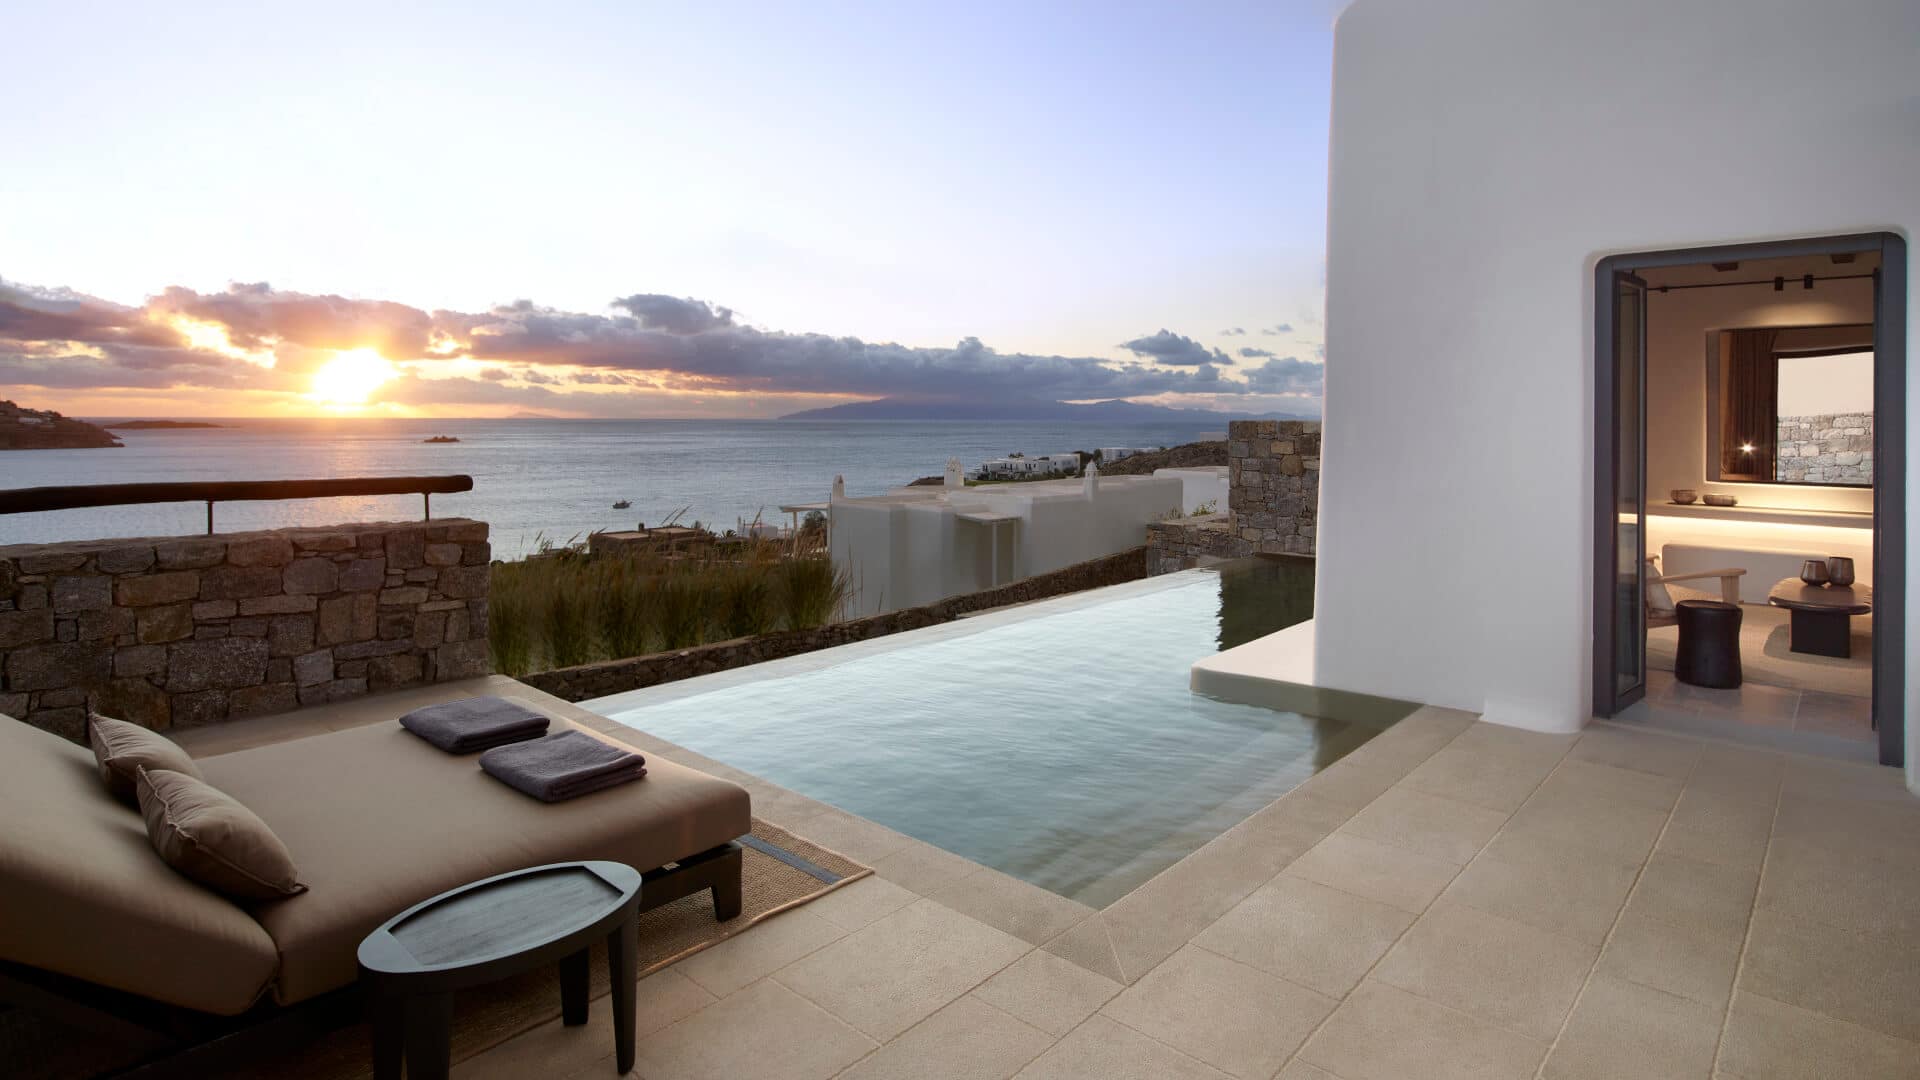 Kalesma suite, Mykonos one of the new hotel openings in 2020 in Europe